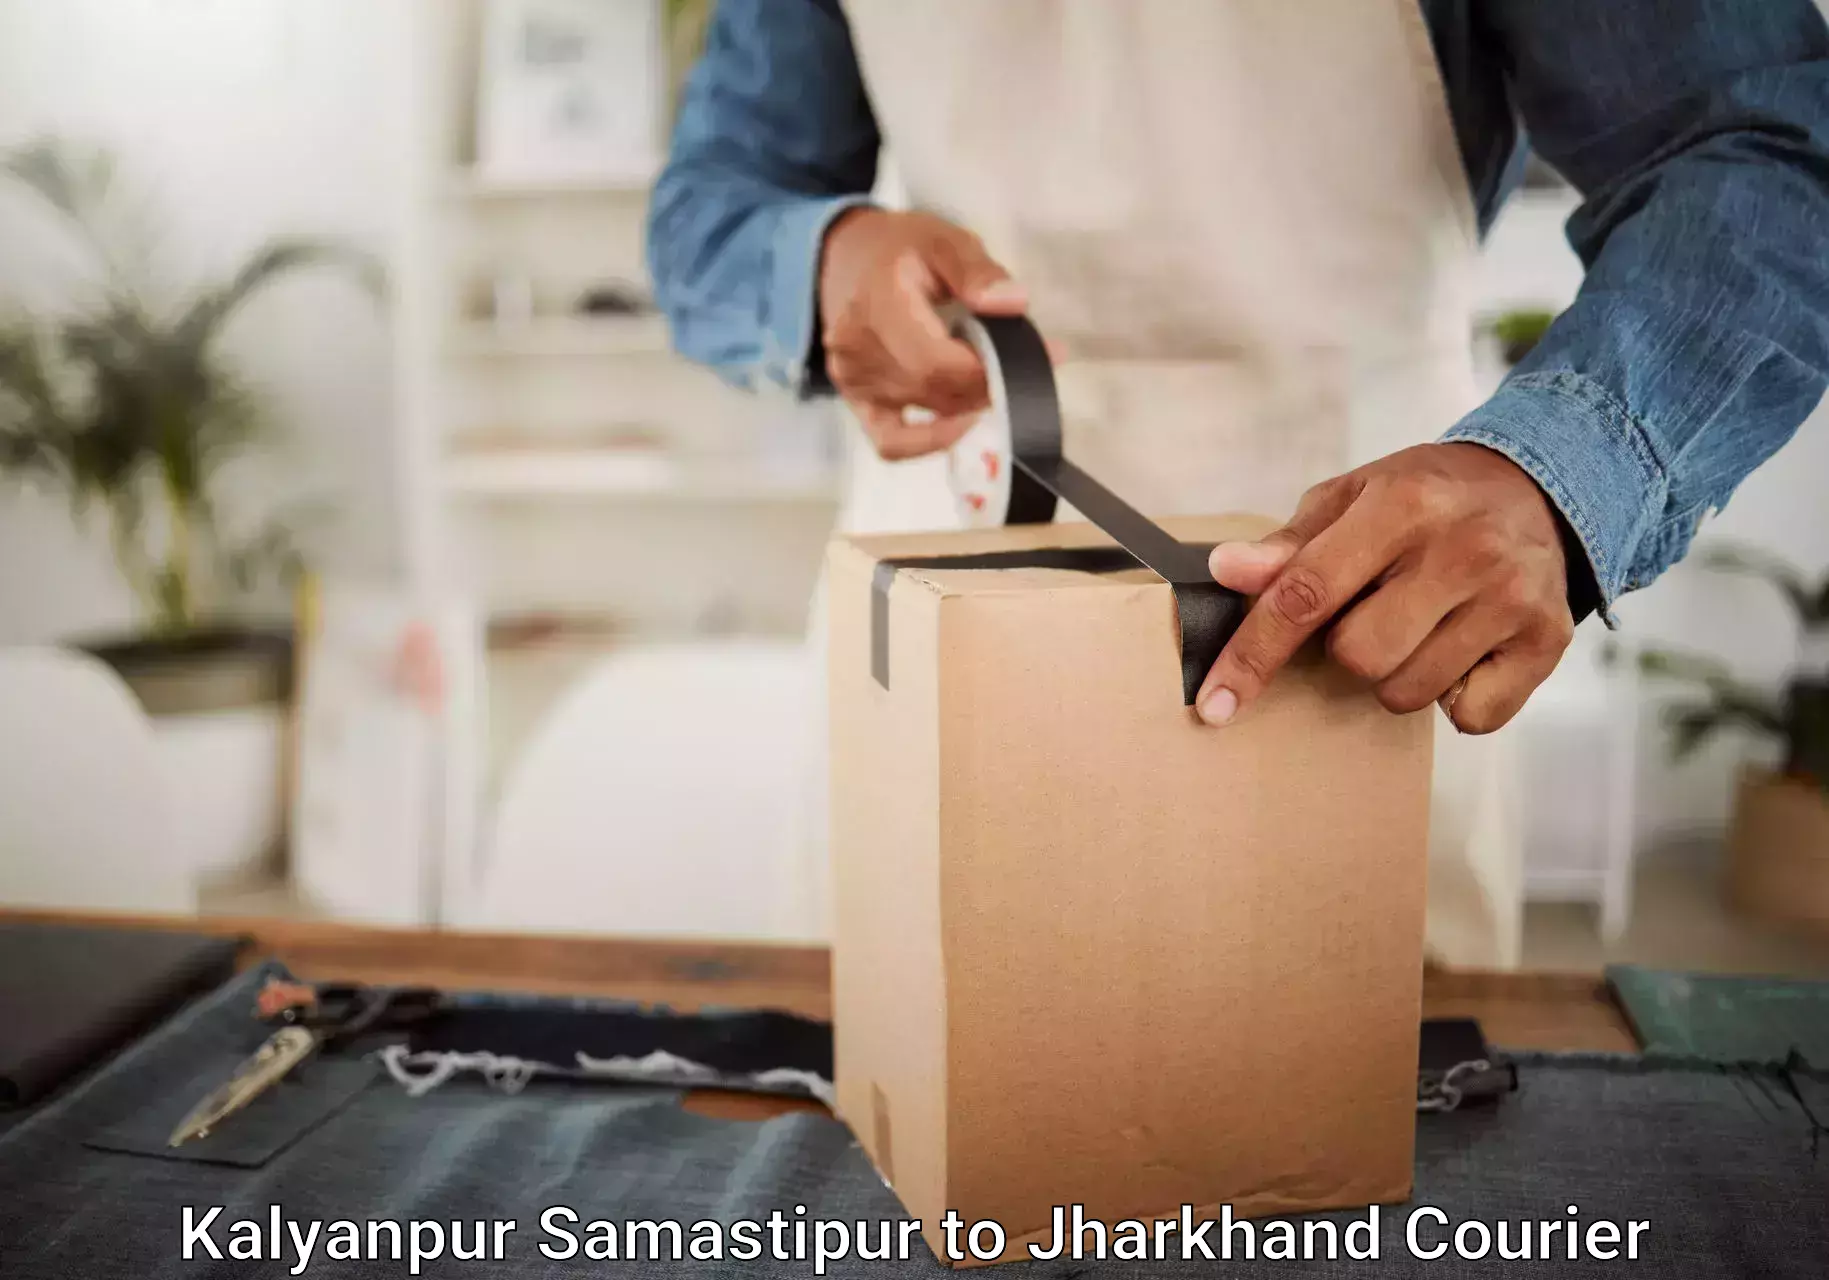 Luggage dispatch service Kalyanpur Samastipur to Jharkhand